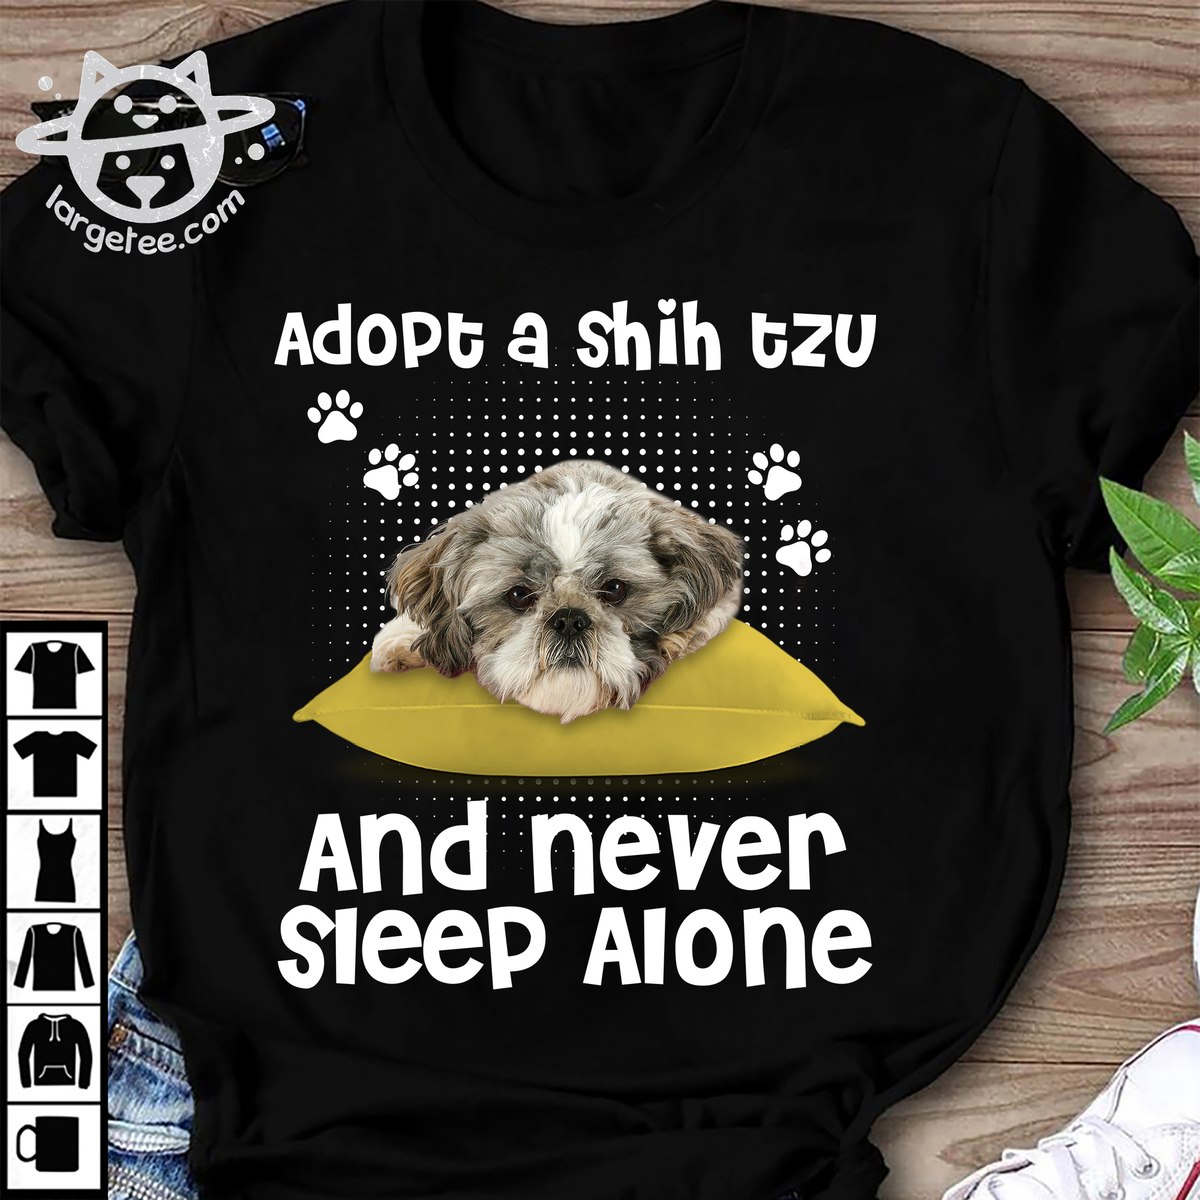 Adopt a ShihTzu and never sleep alone - Dog lover